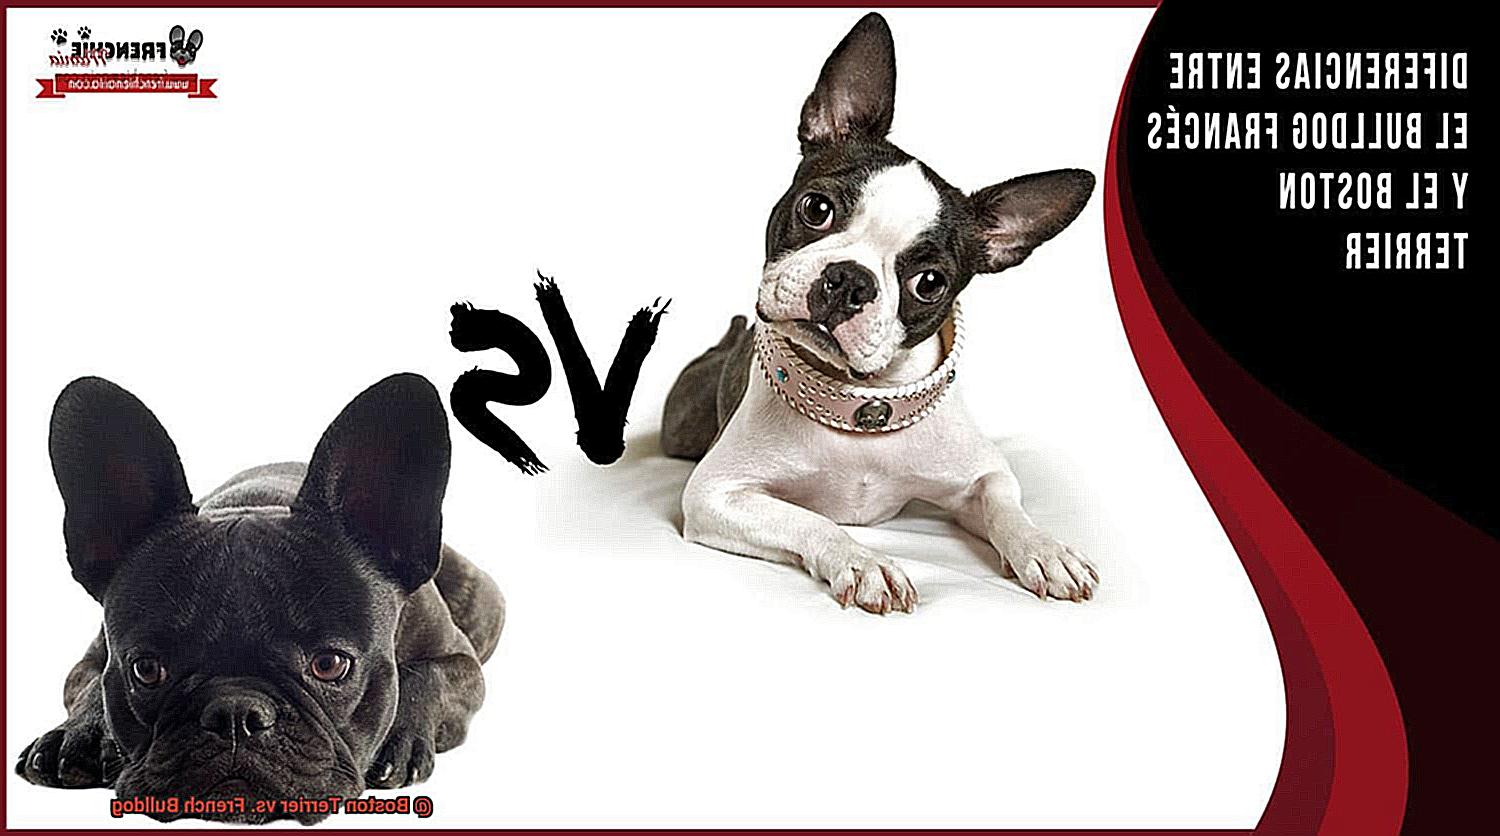 Boston Terrier vs. French Bulldog-6